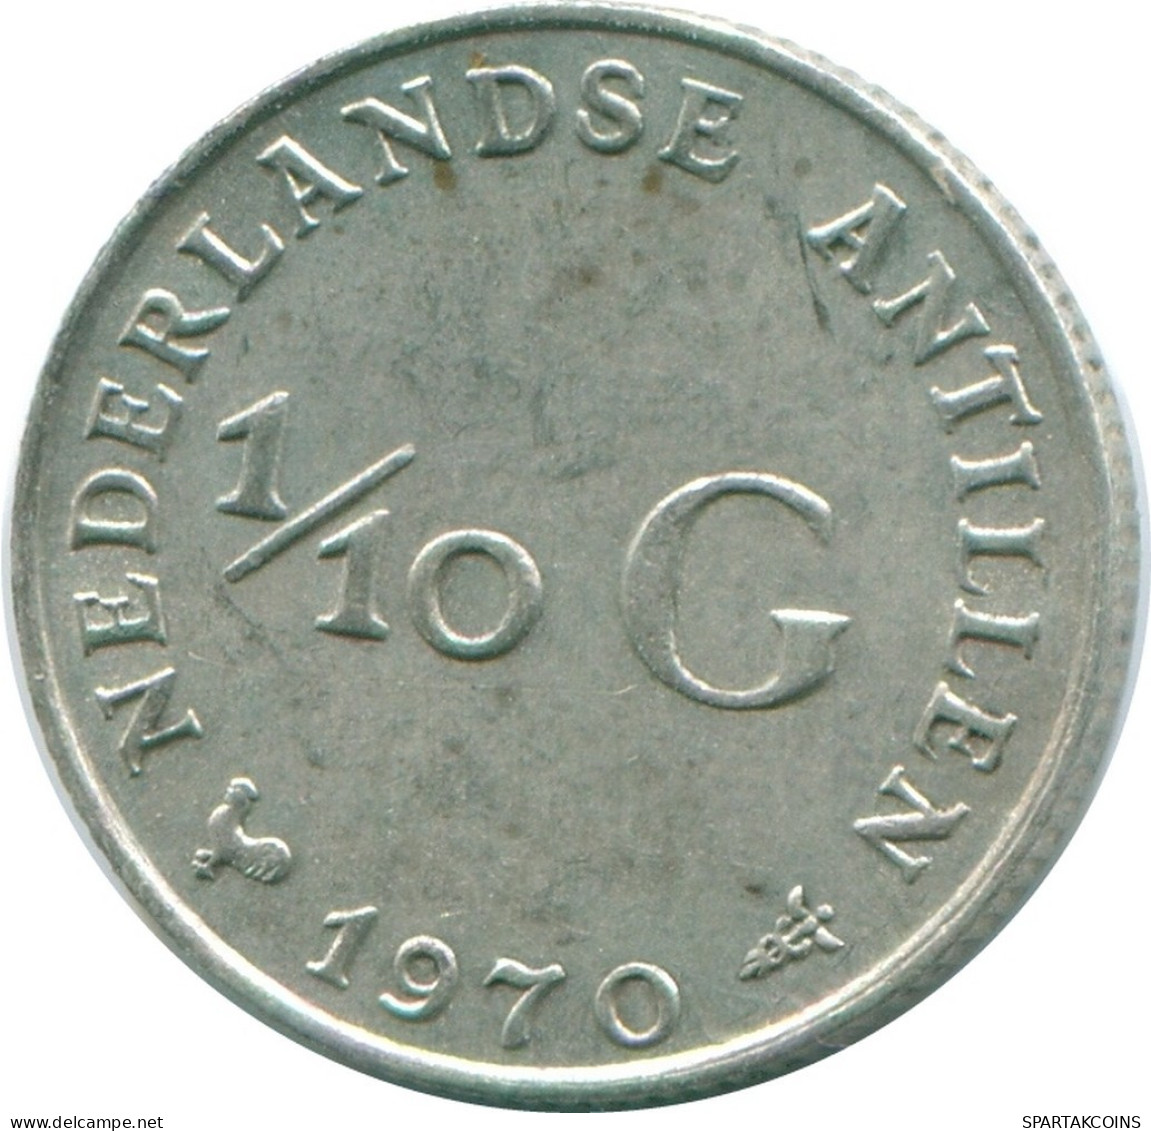 1/10 GULDEN 1970 NIEDERLÄNDISCHE ANTILLEN SILBER Koloniale Münze #NL12954.3.D.A - Netherlands Antilles